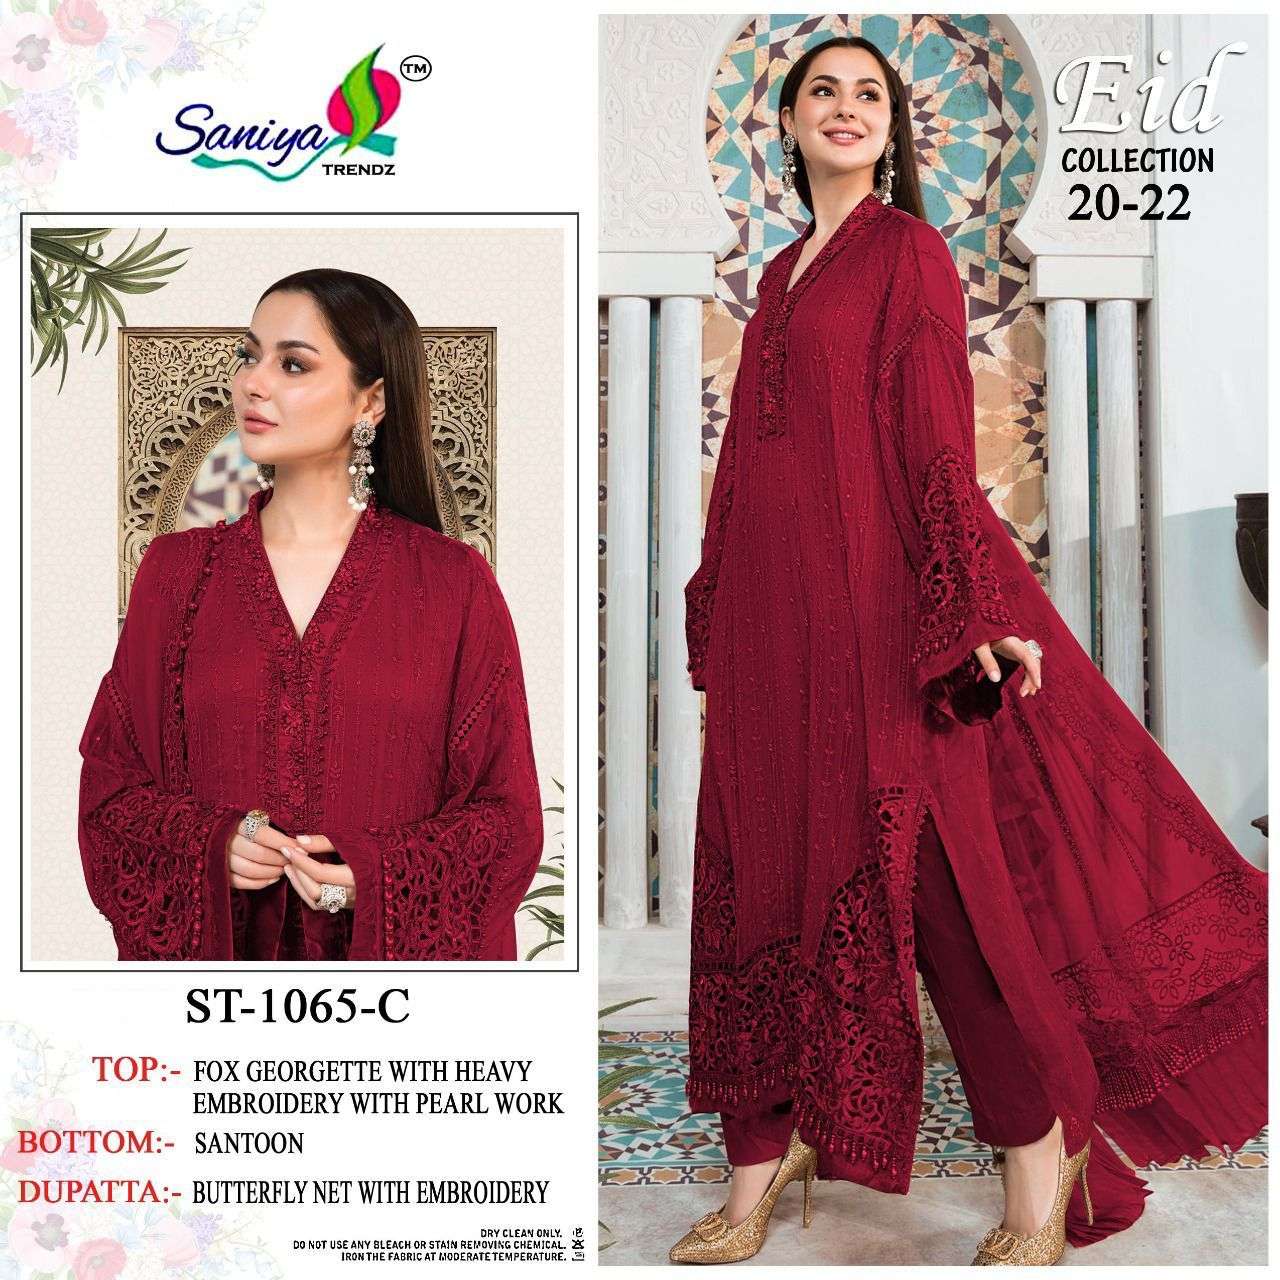 Saniya Trendz Eid Collection 20-22 ST-1065-C